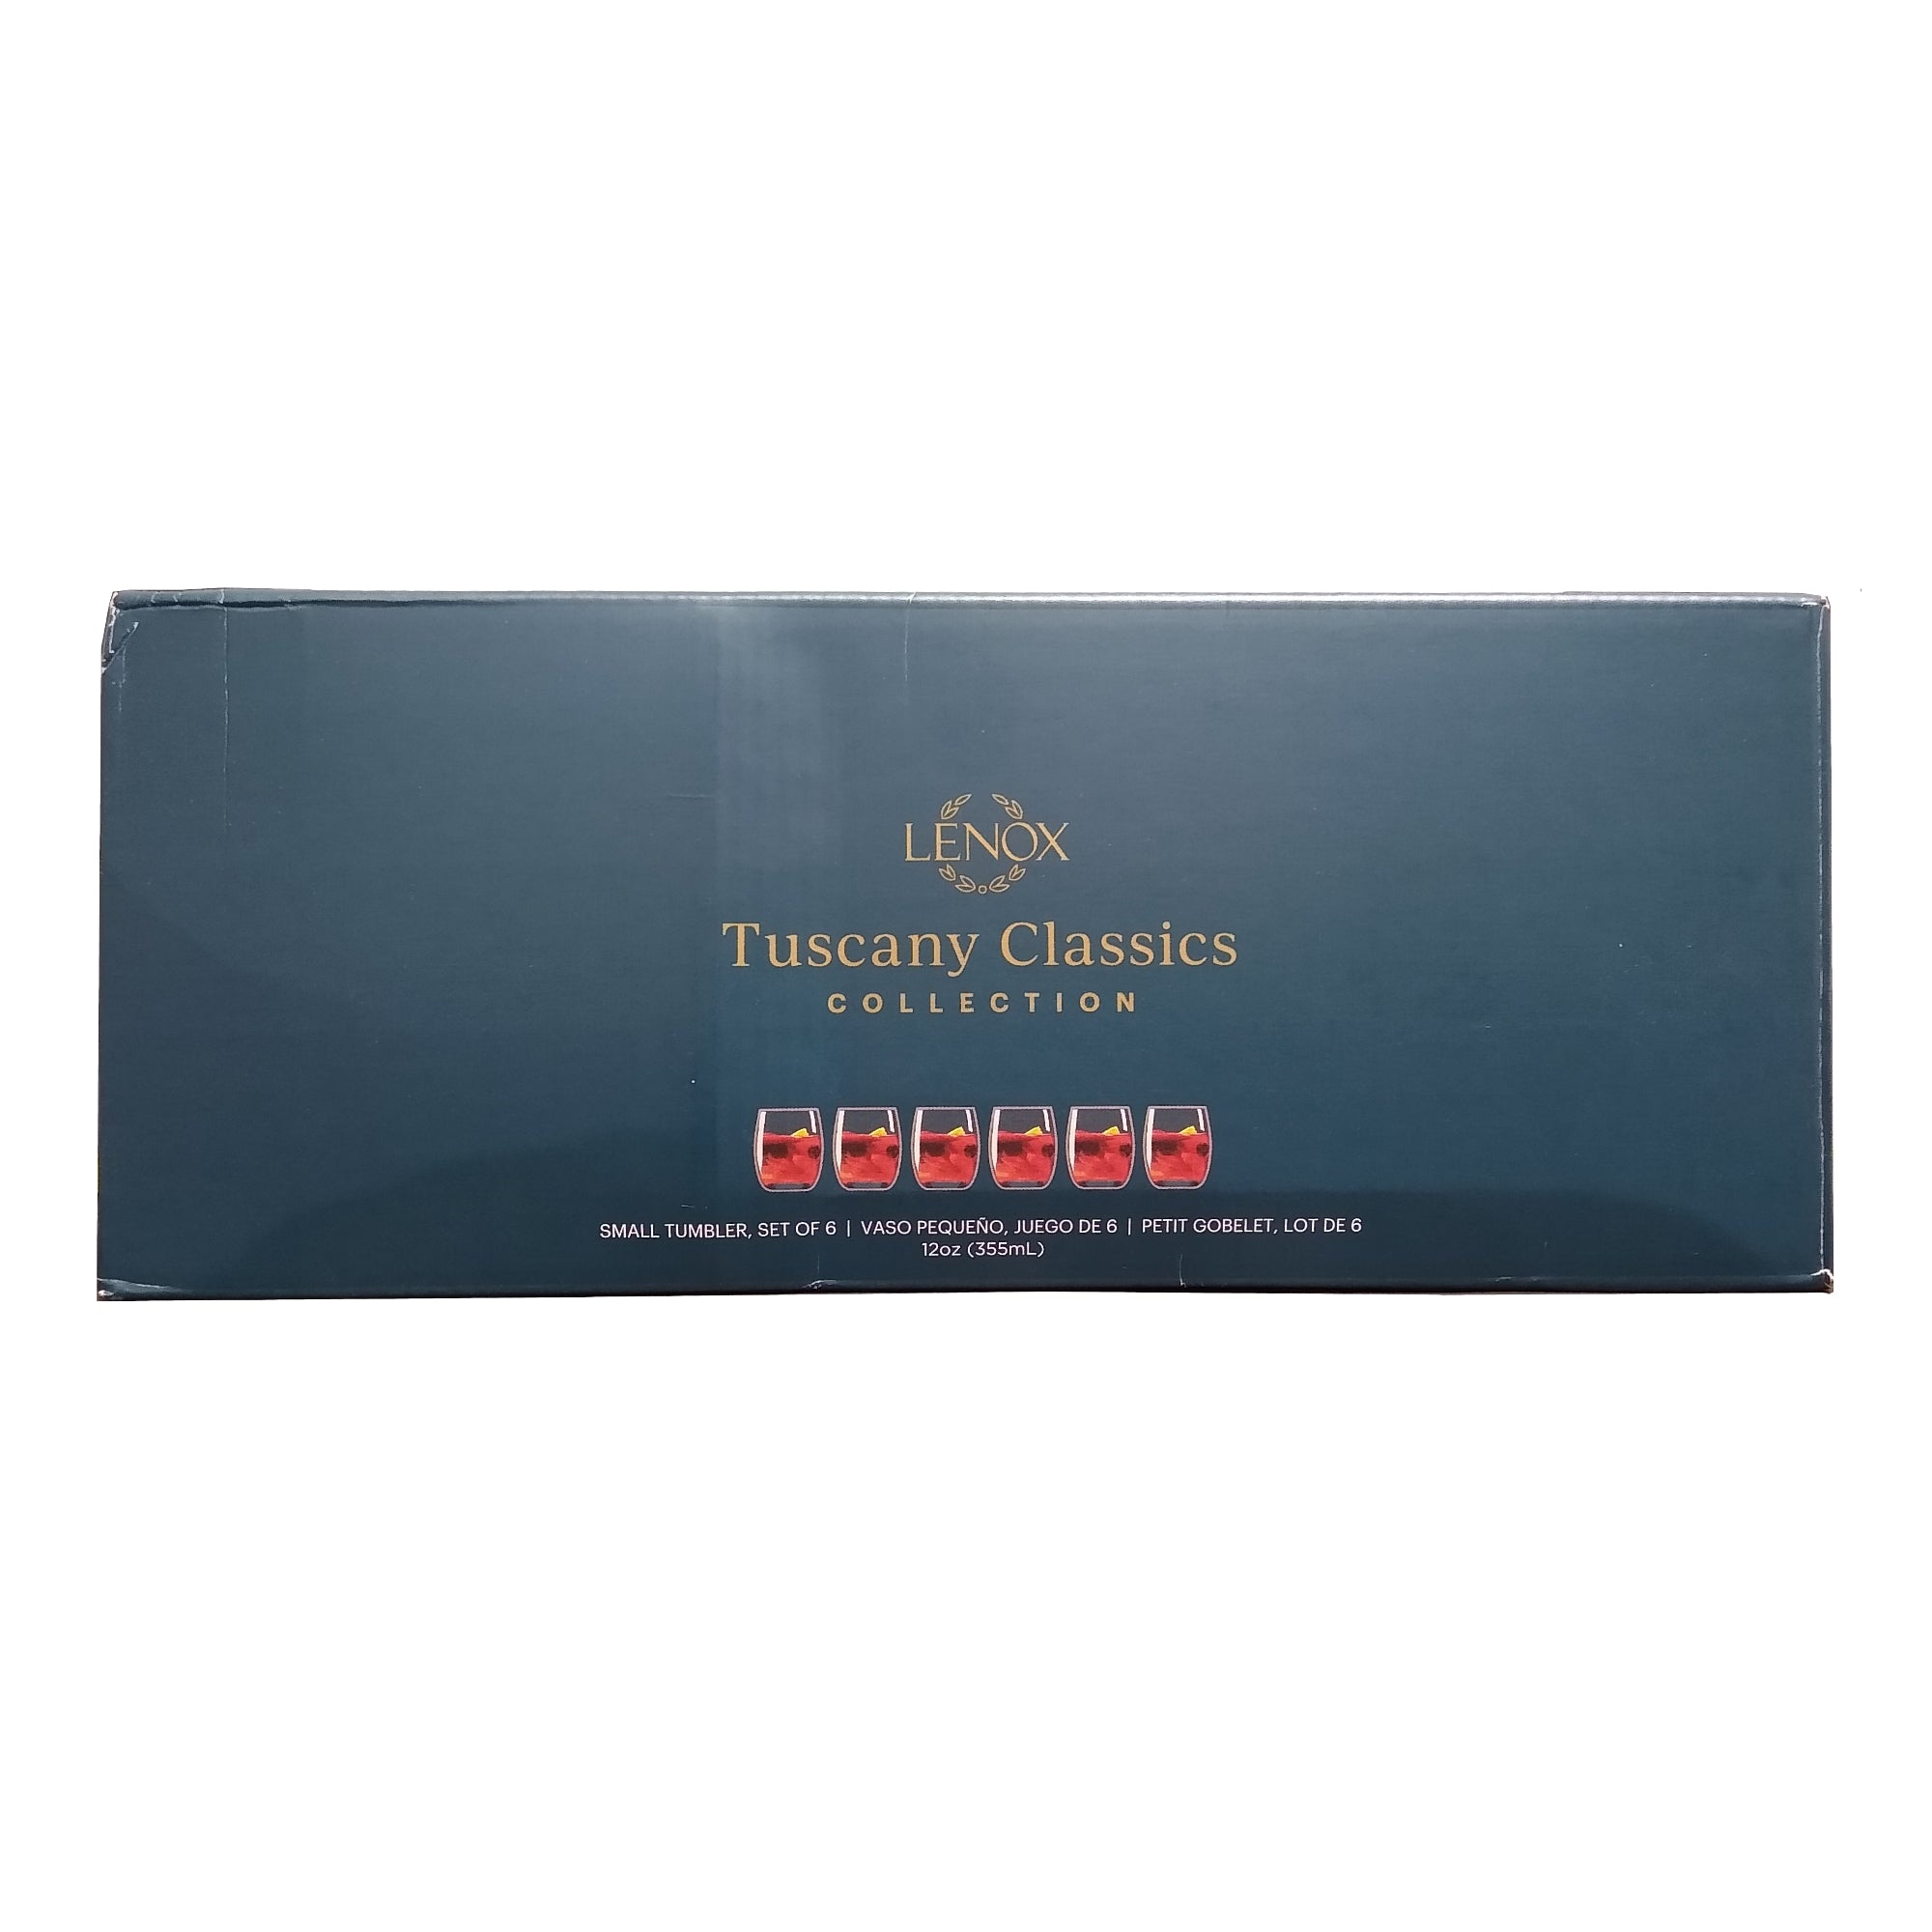 Tuscany Classics Large Tumbler Set of 6 by Lenox